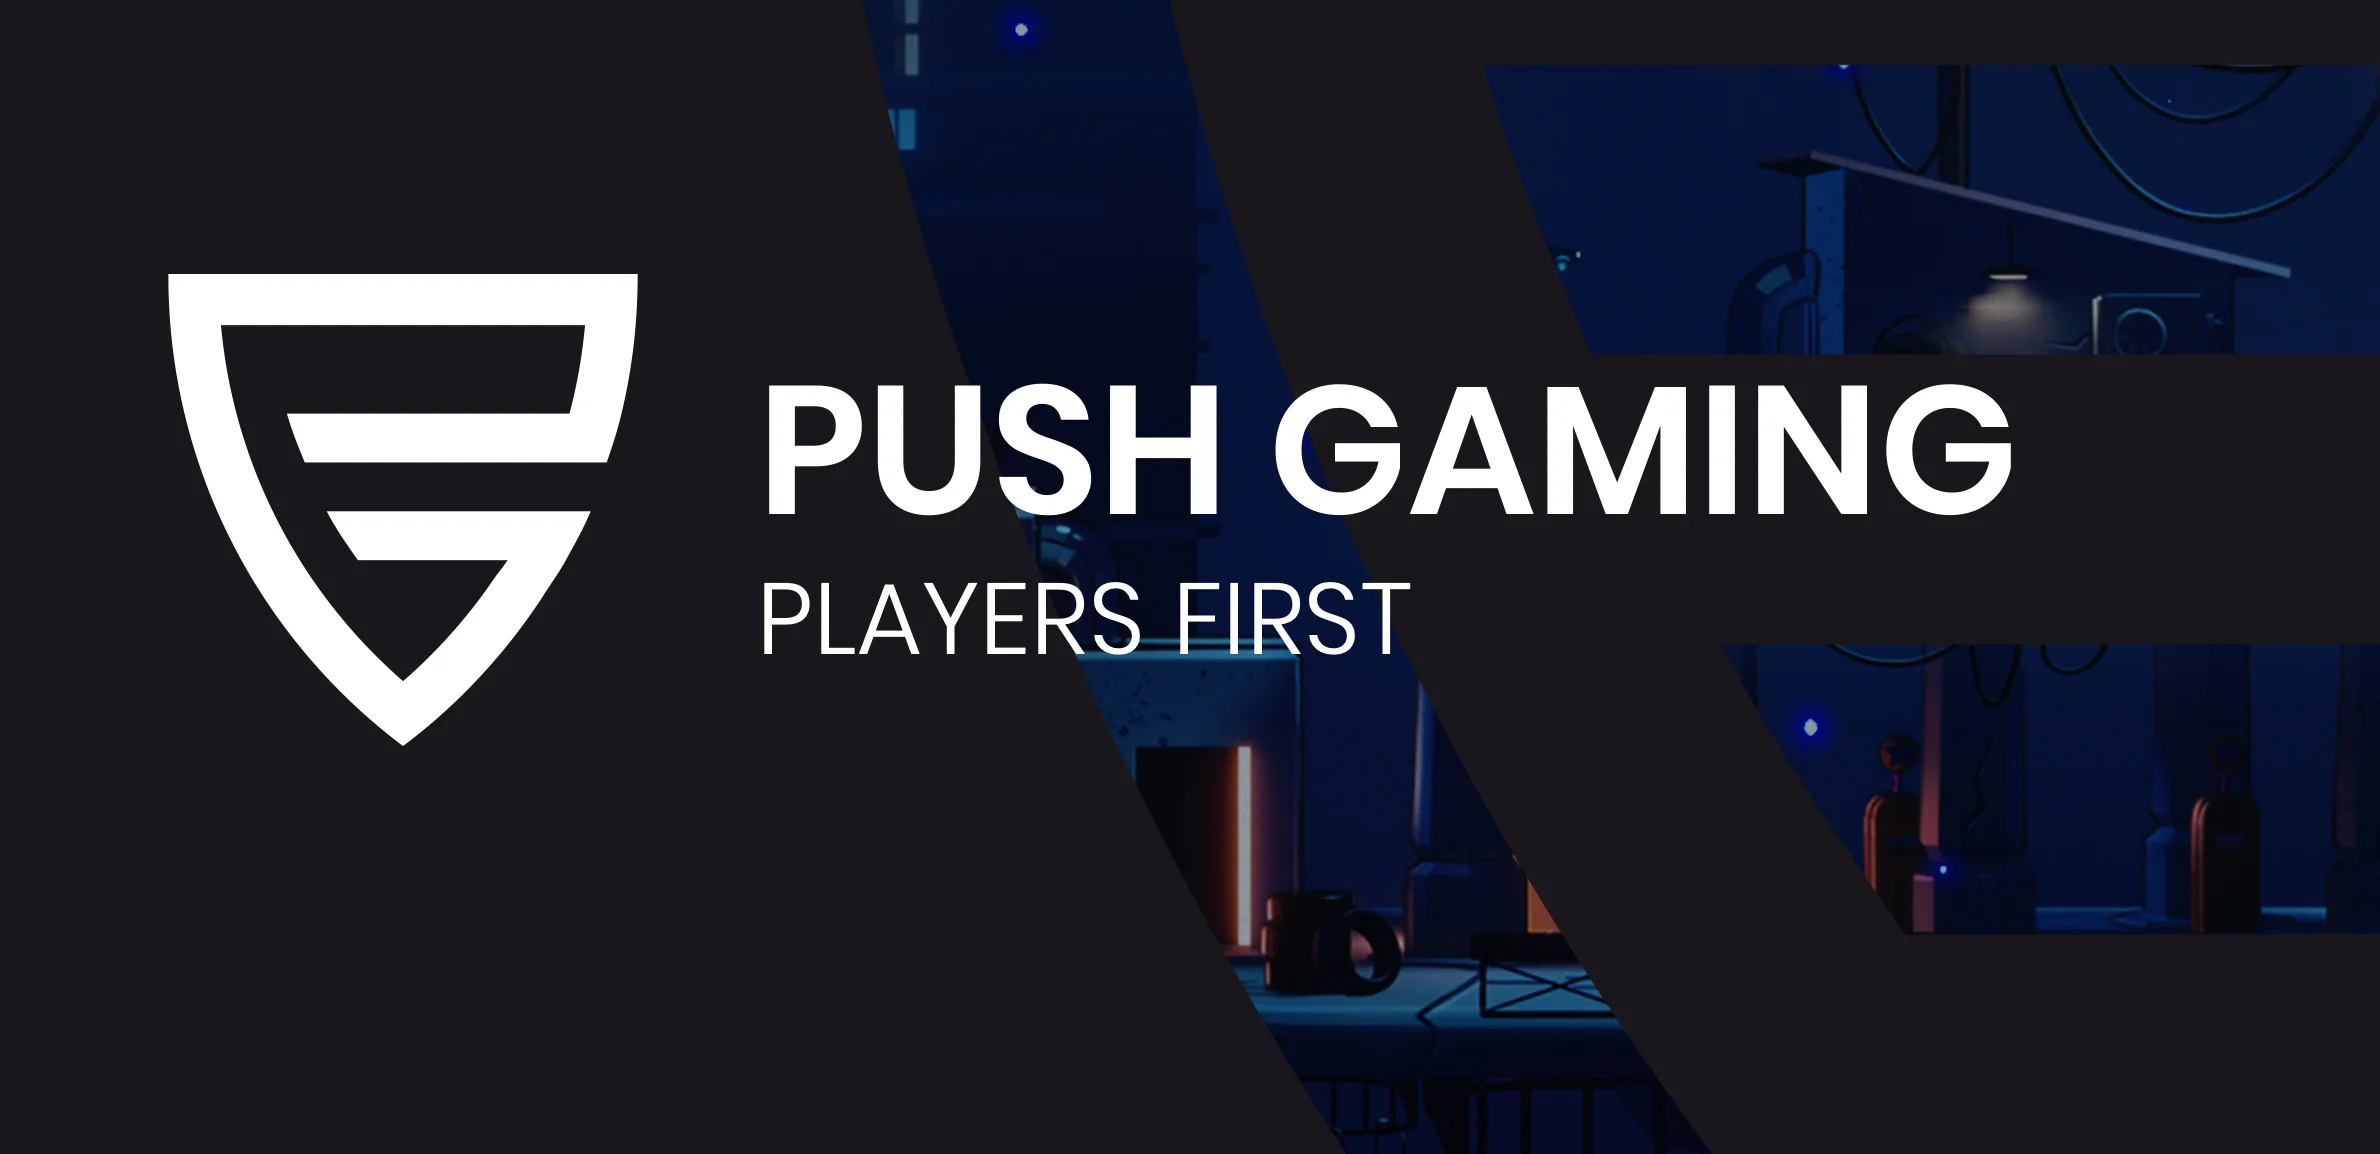 Push gaming in Online Casinos